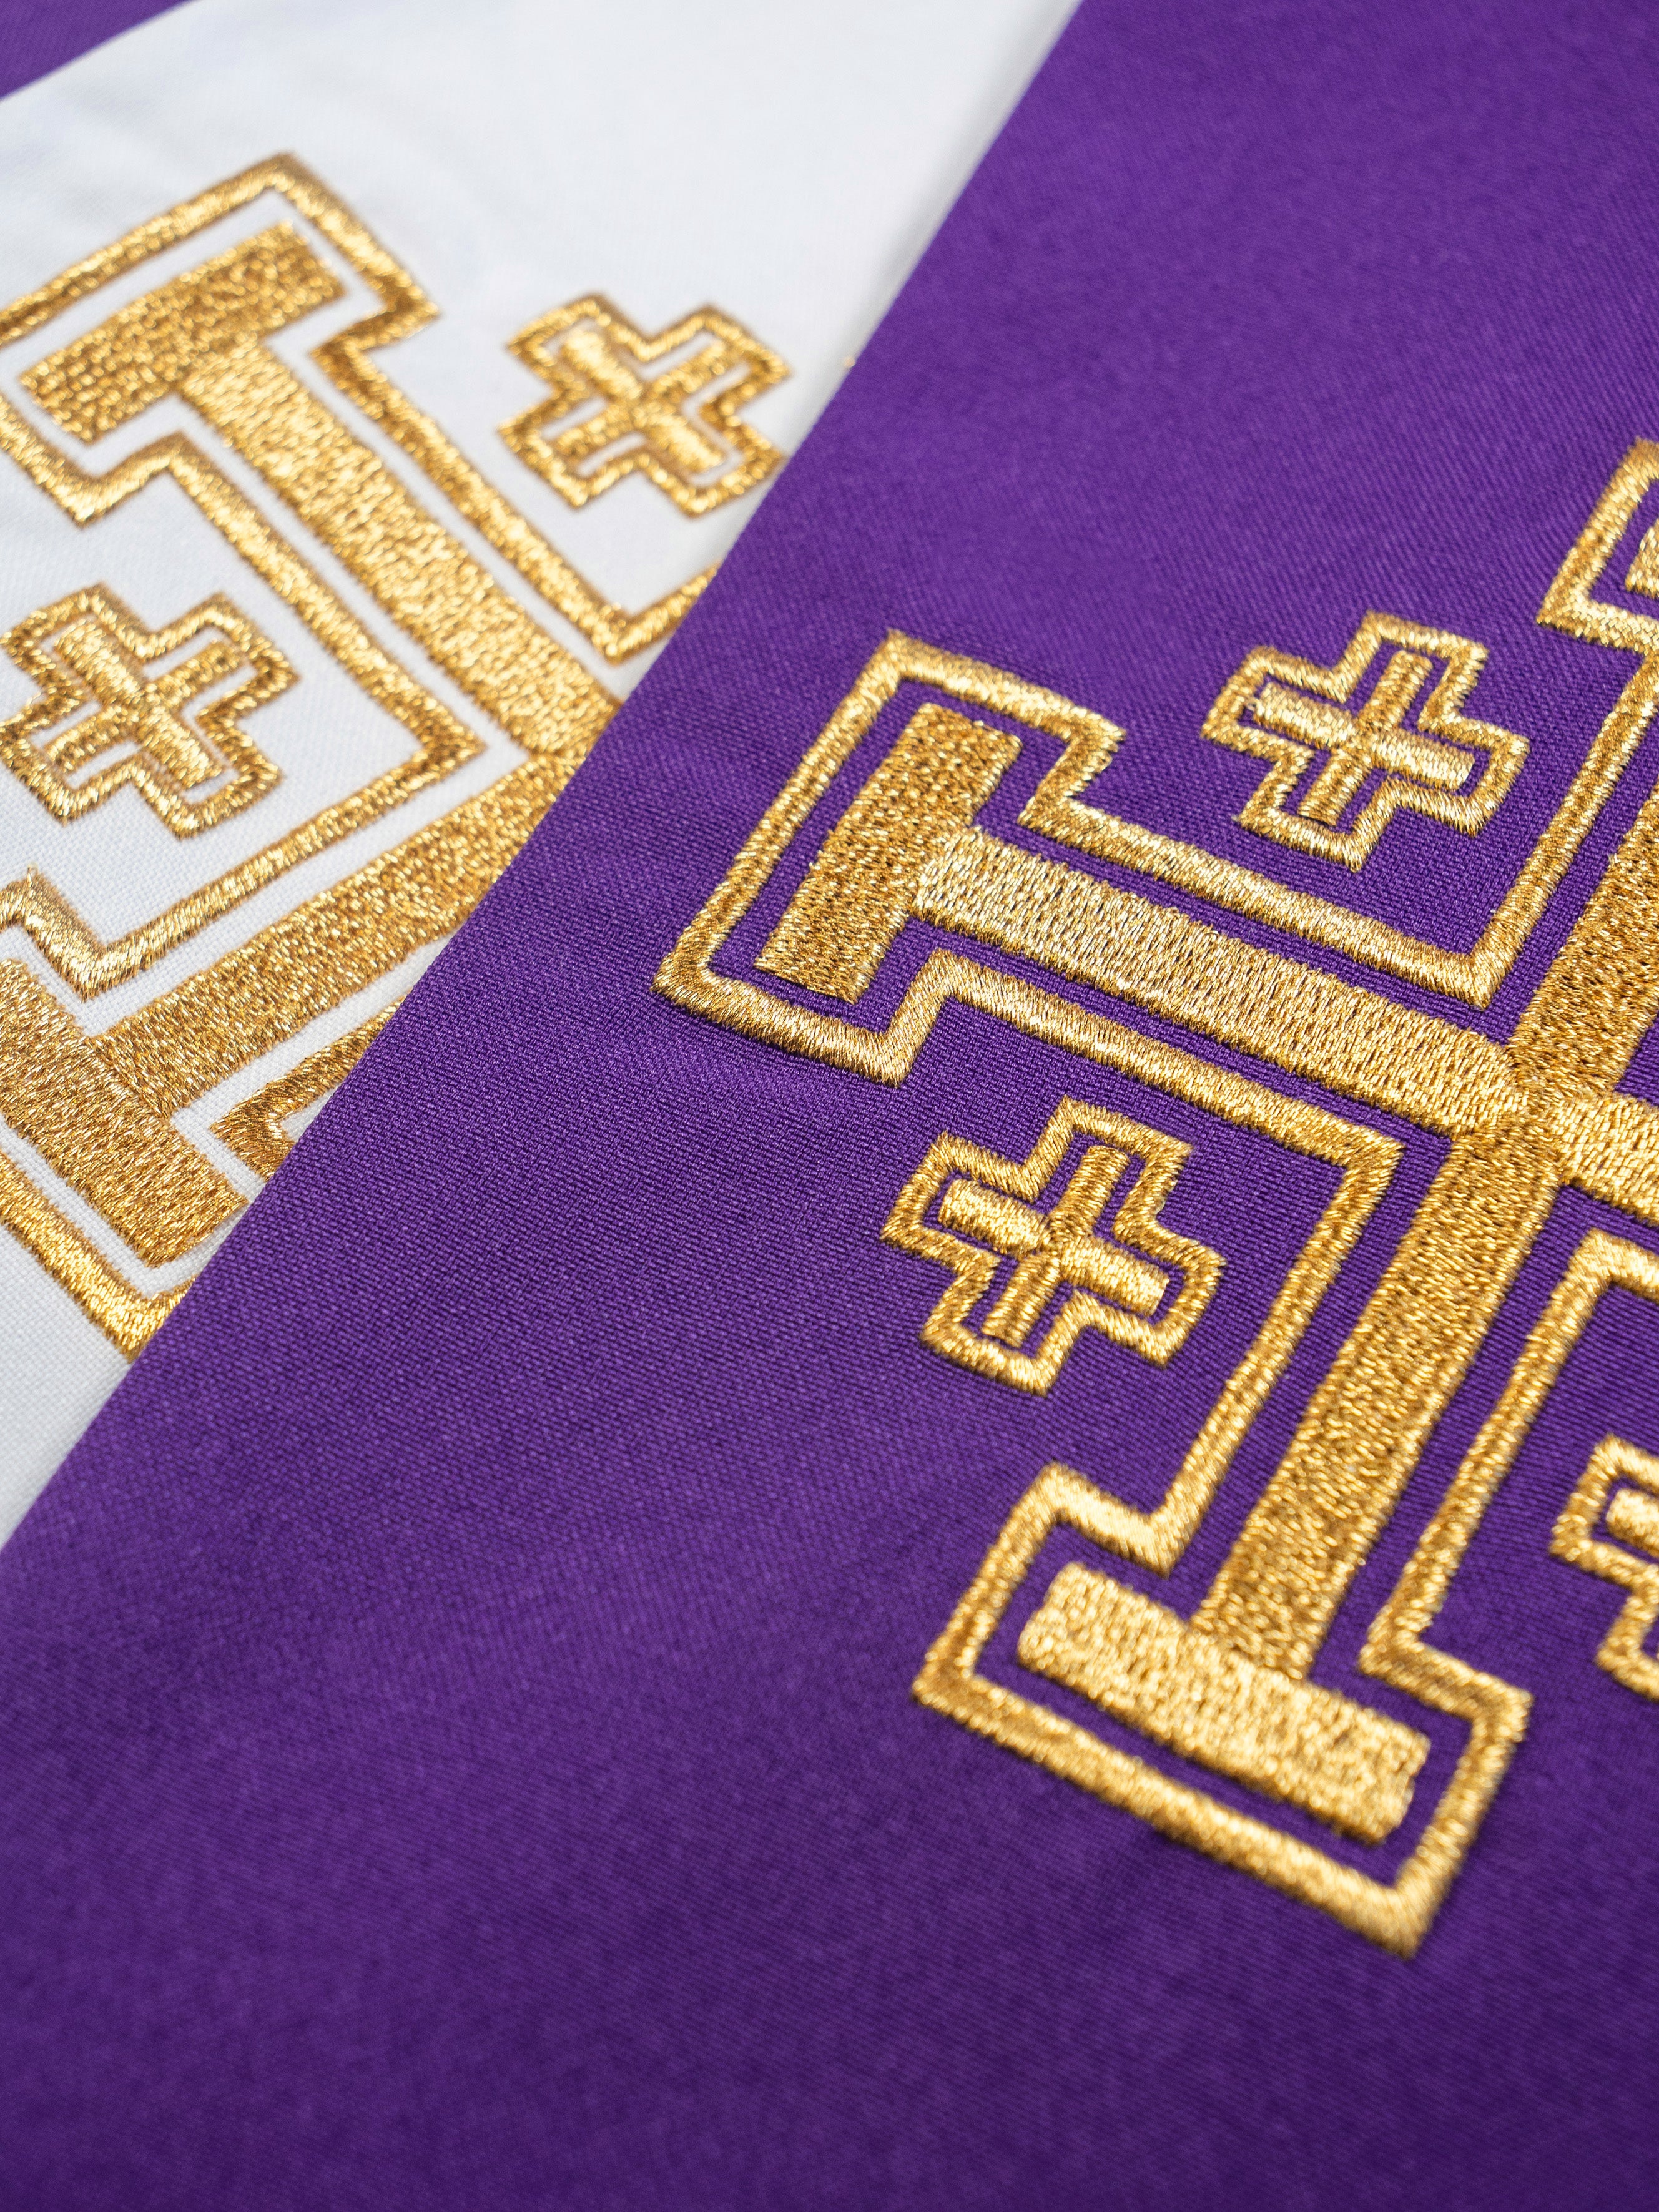 Double-sided stole Jerusalem Cross purple and white